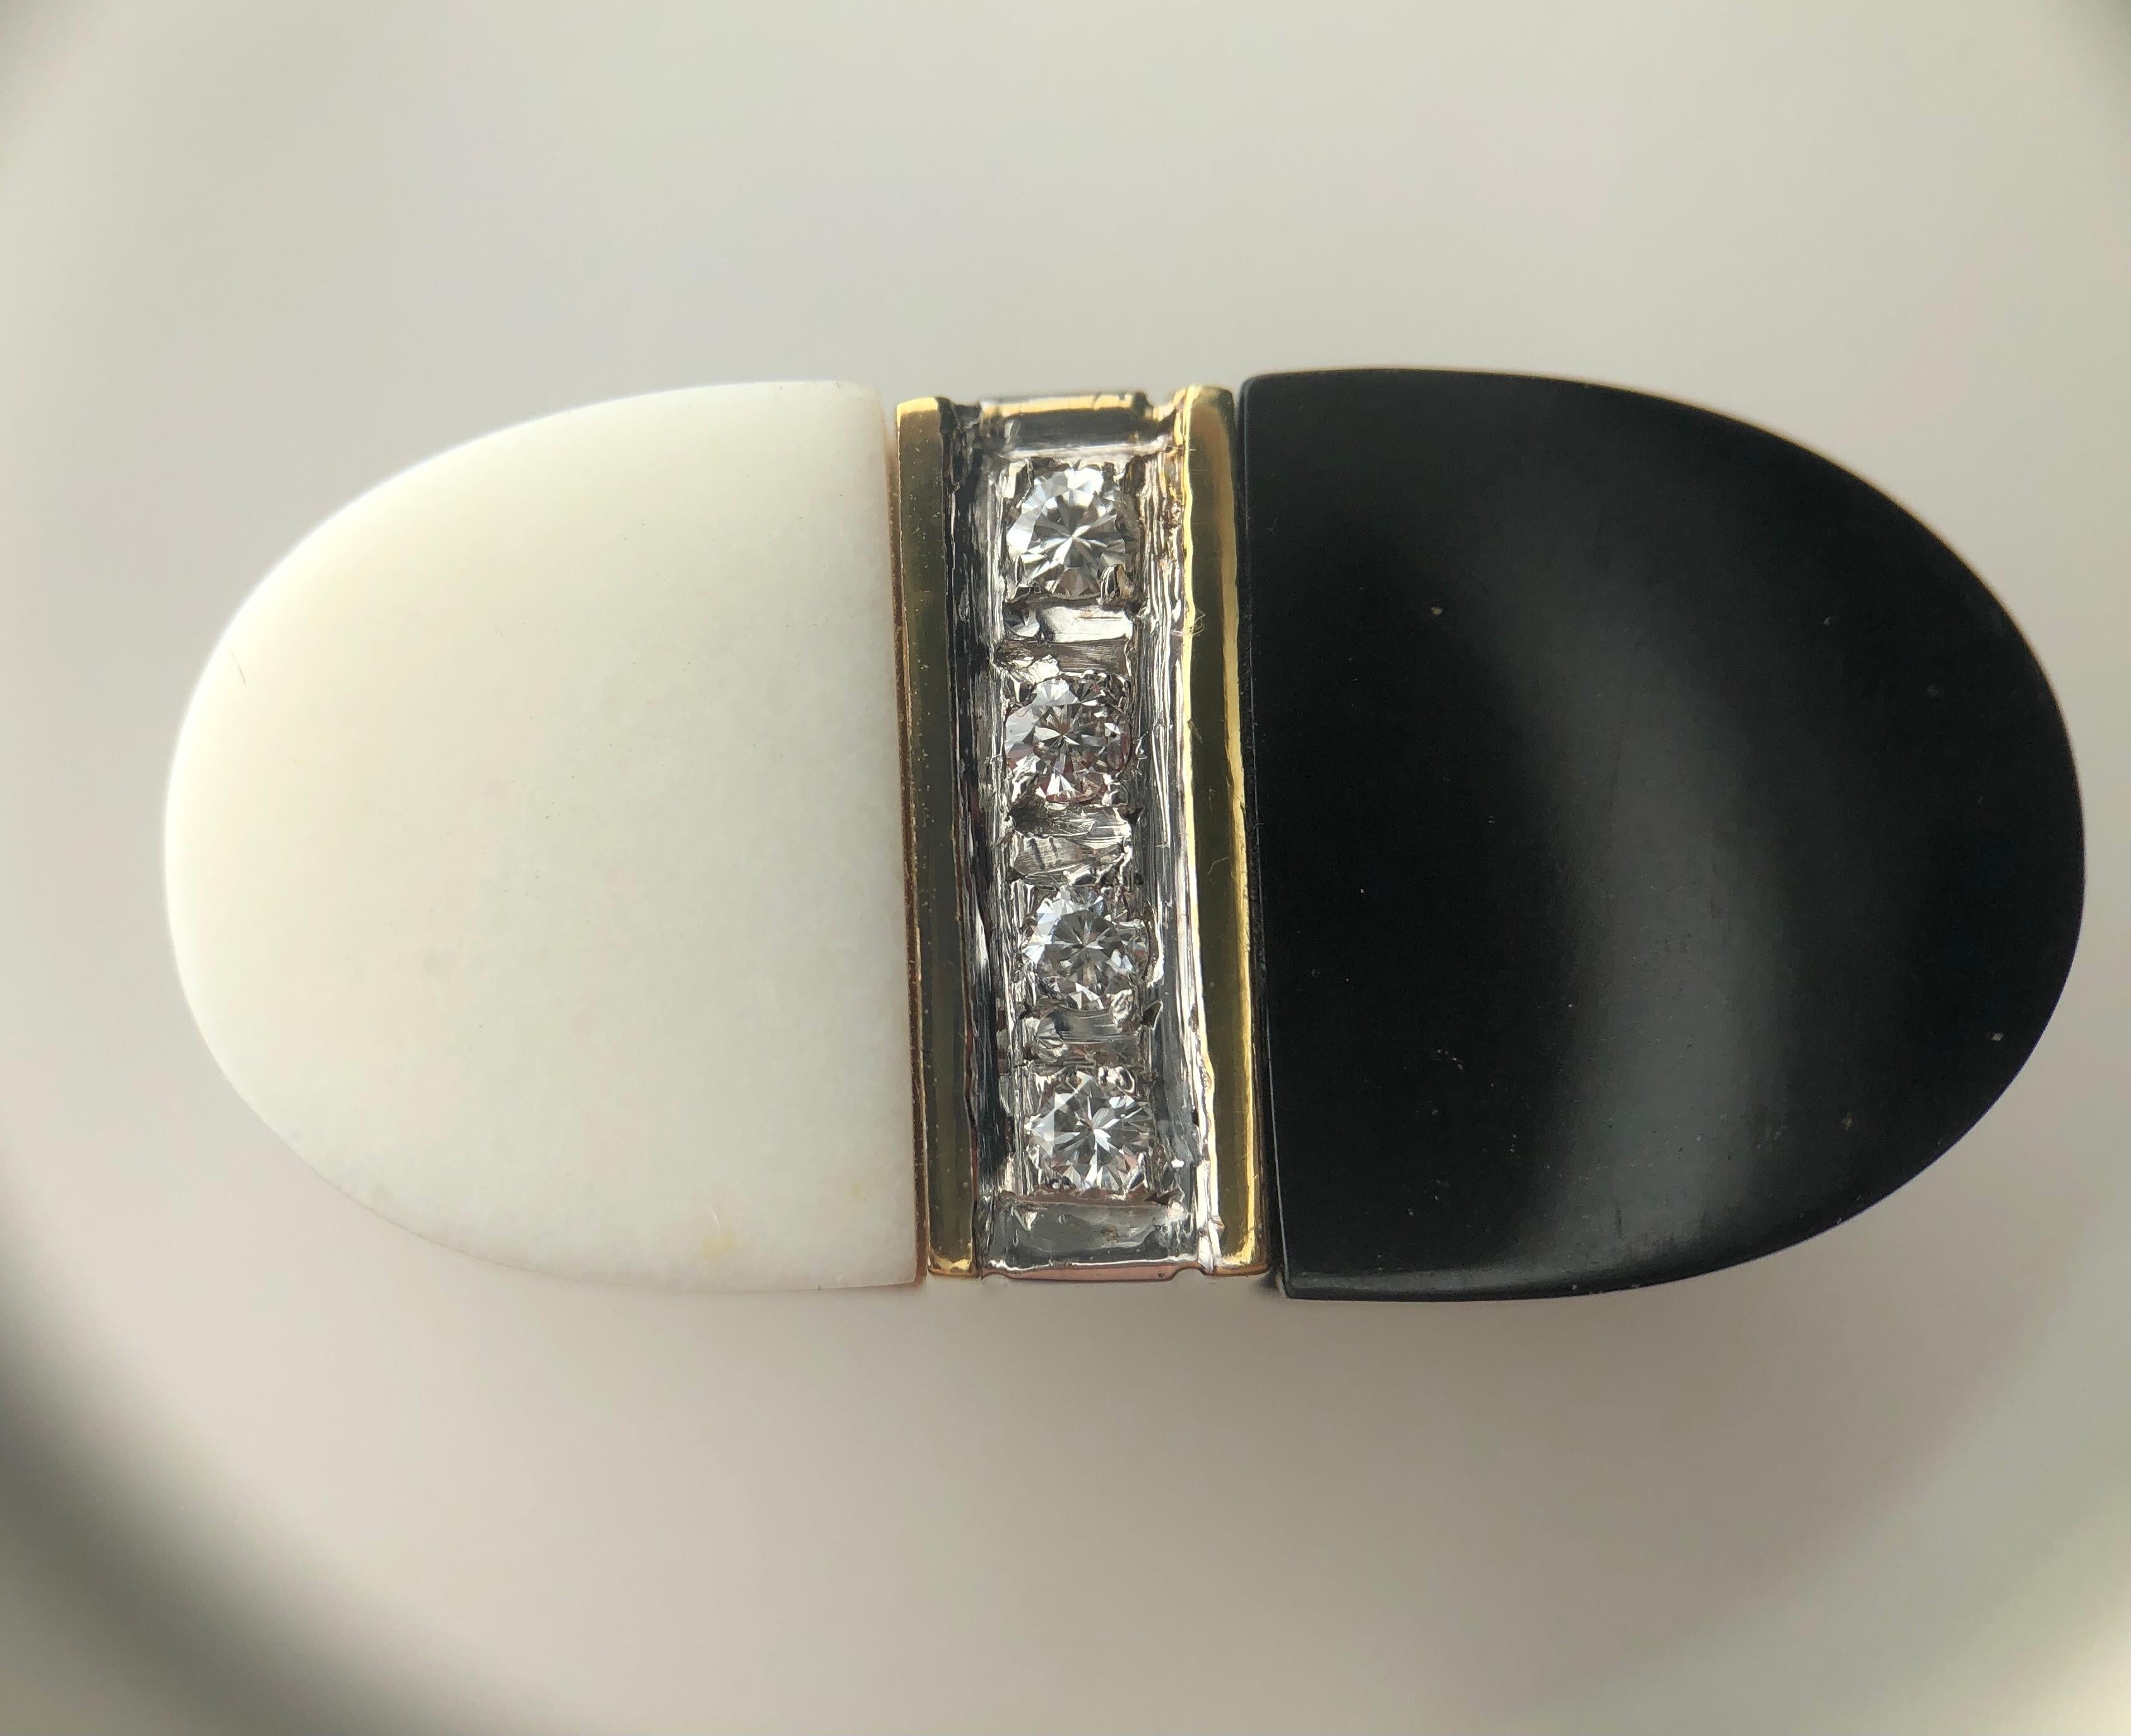 Women's or Men's 18 Karat Gold, Black and White Onyx Diamond Cufflinks For Sale